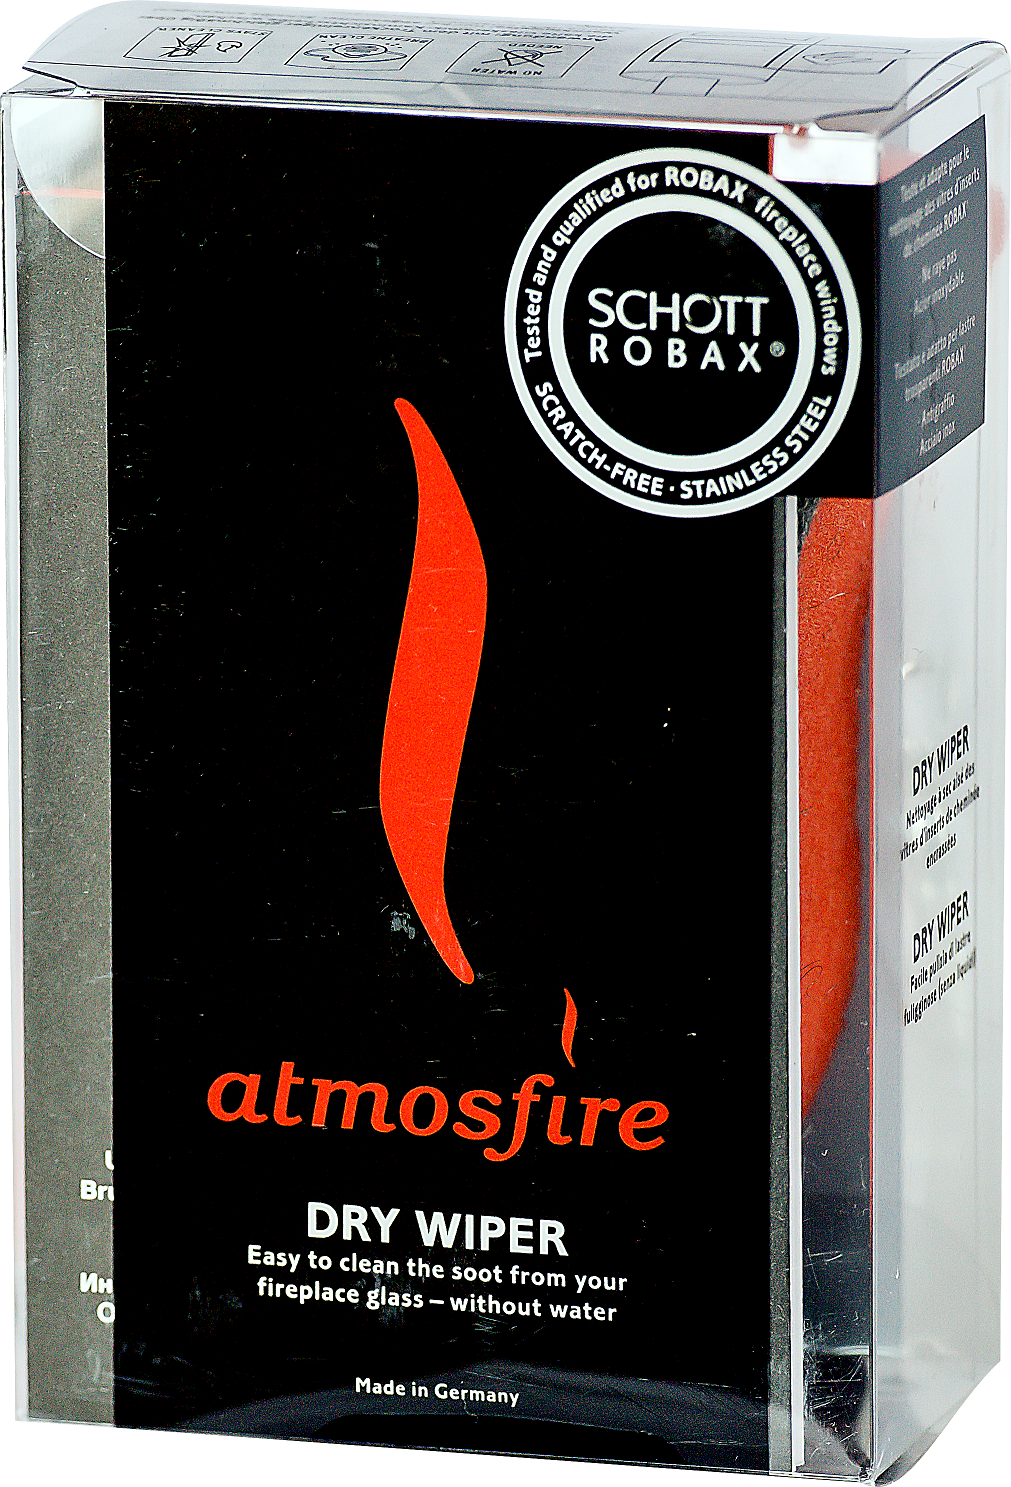 Firewise Atmosfire Dry Wiper